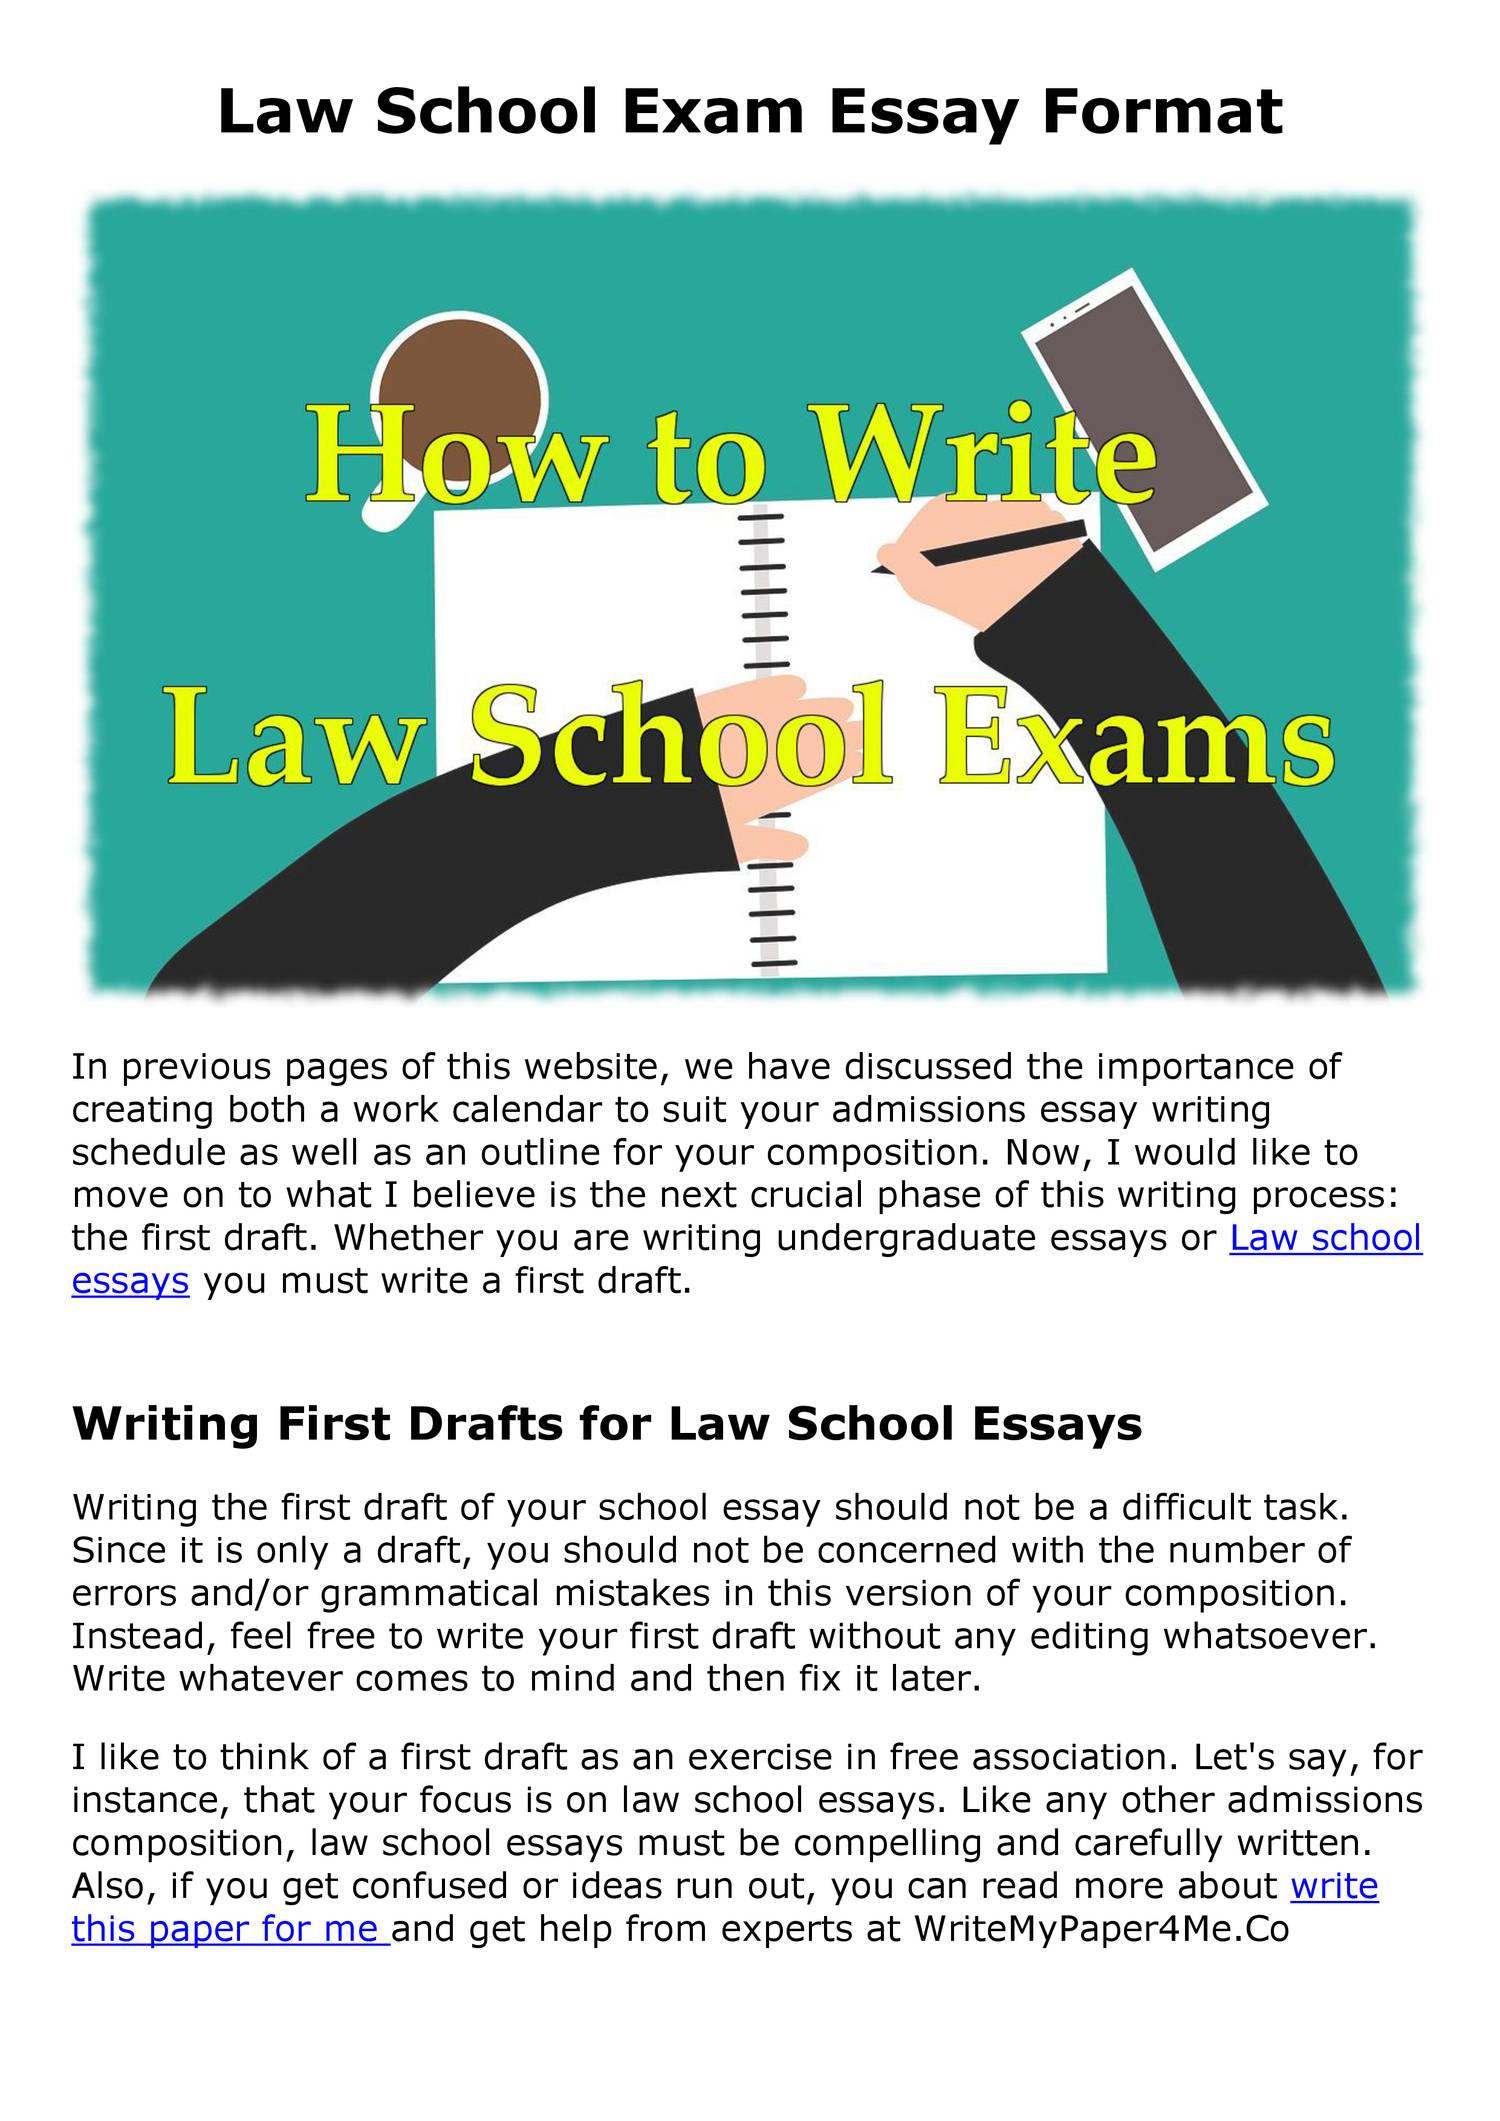 how to write a law school exam essay